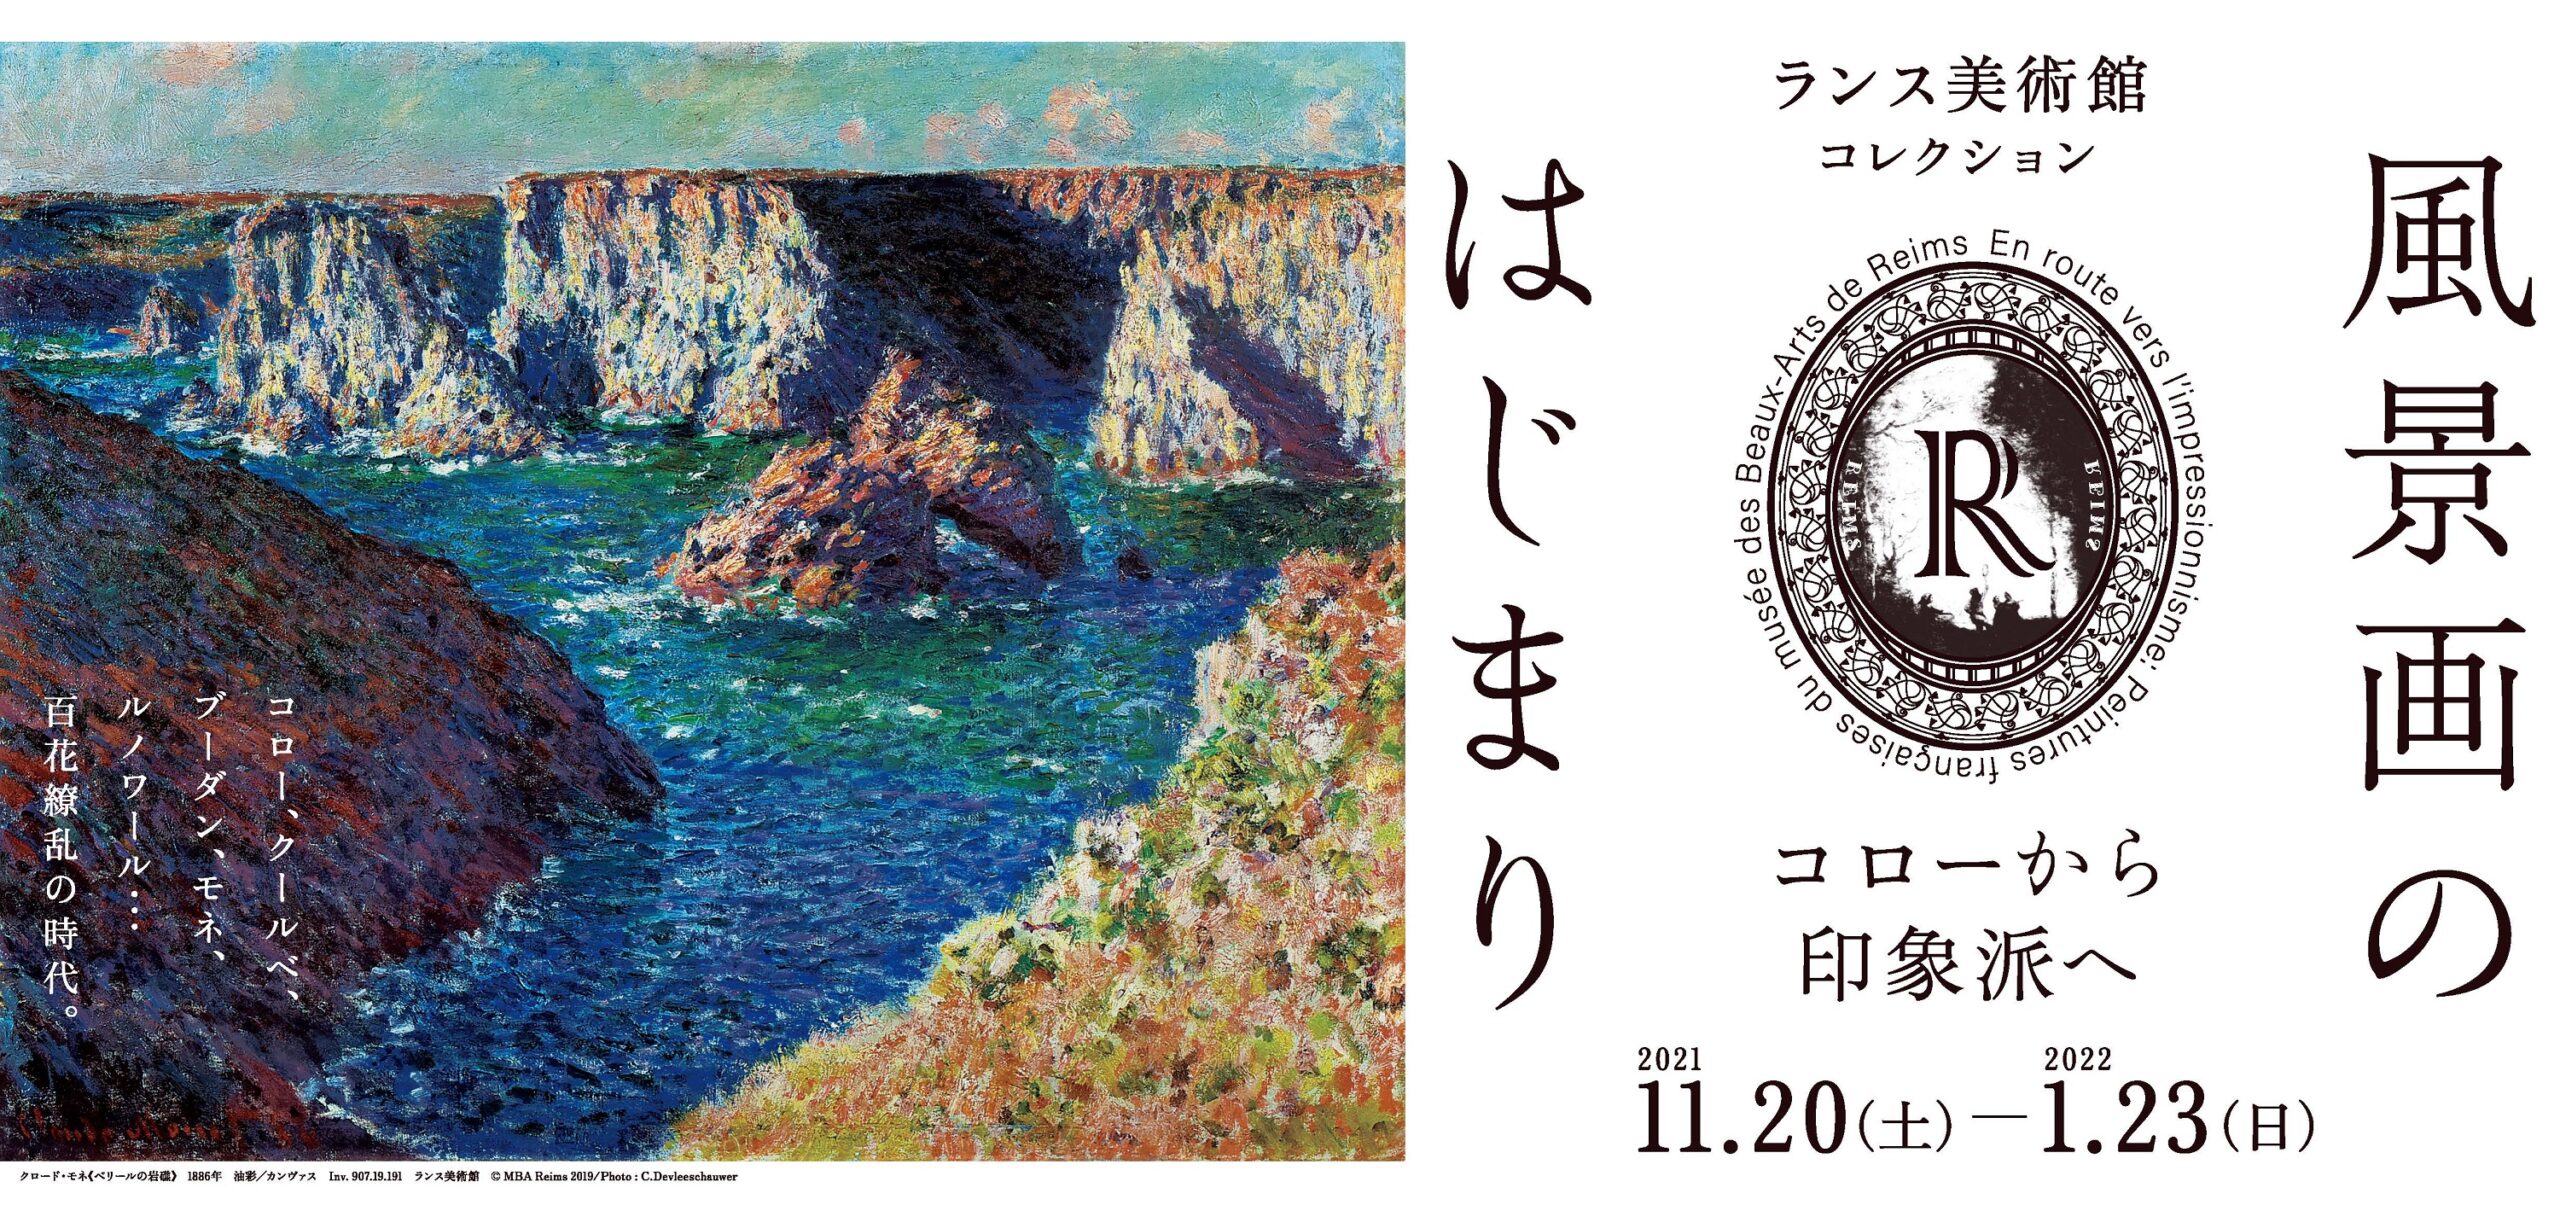 Shizuoka Impressionism exhibition